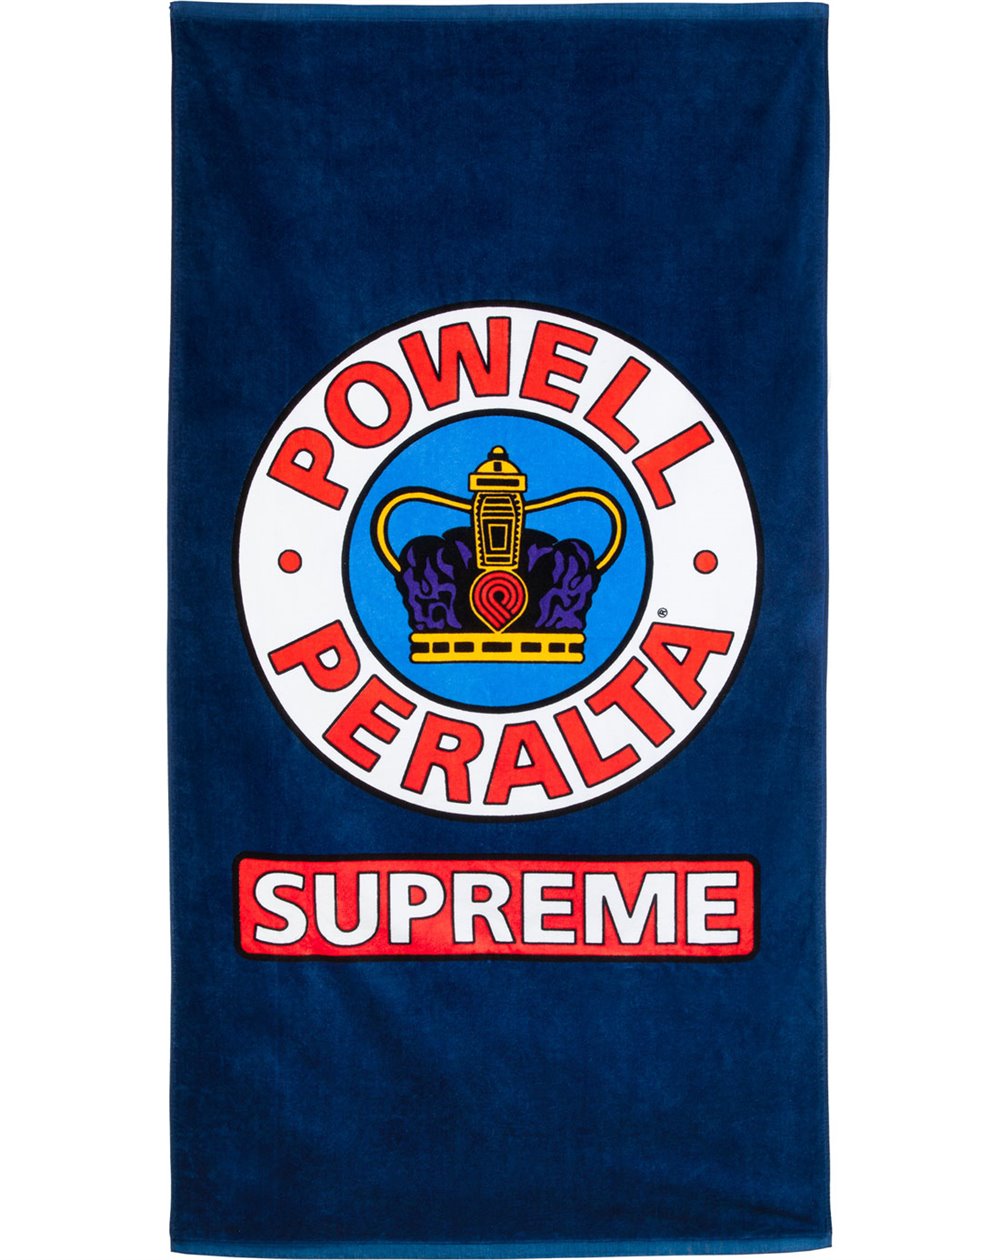 Powell Peralta Supreme Serviette de Plage